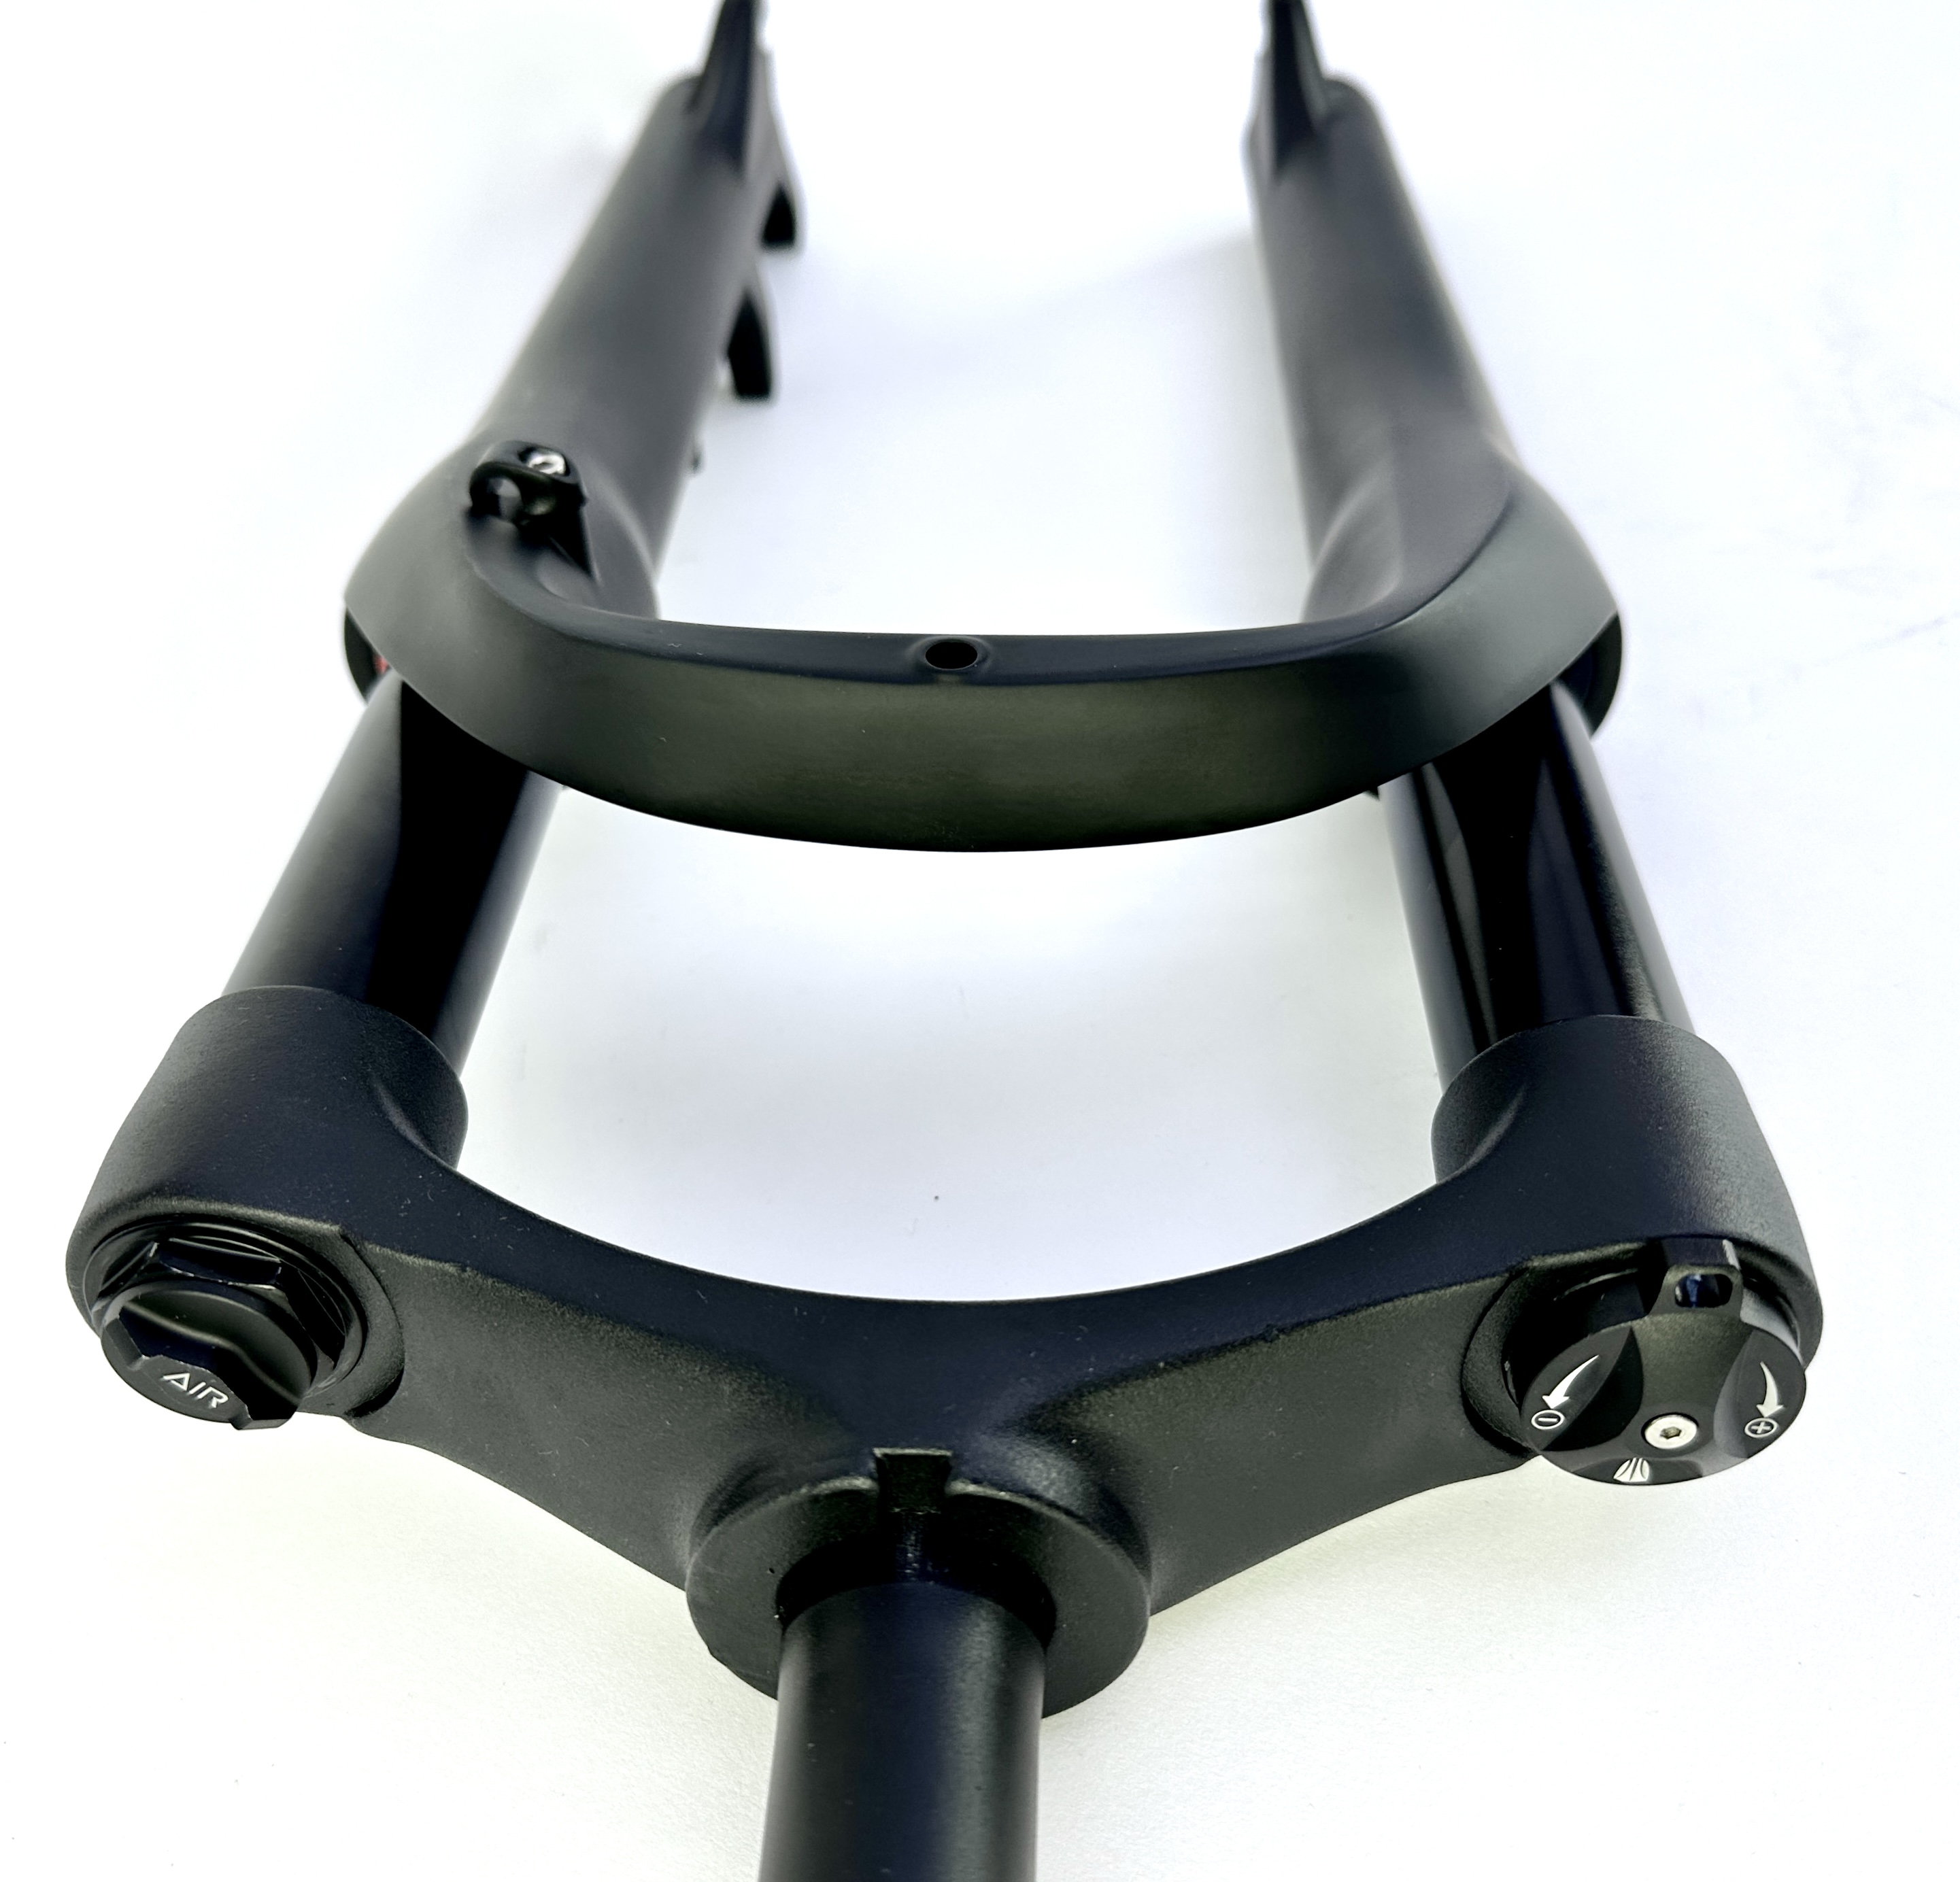 UD 204 Suspension fork for fatbike air suspension, matt black